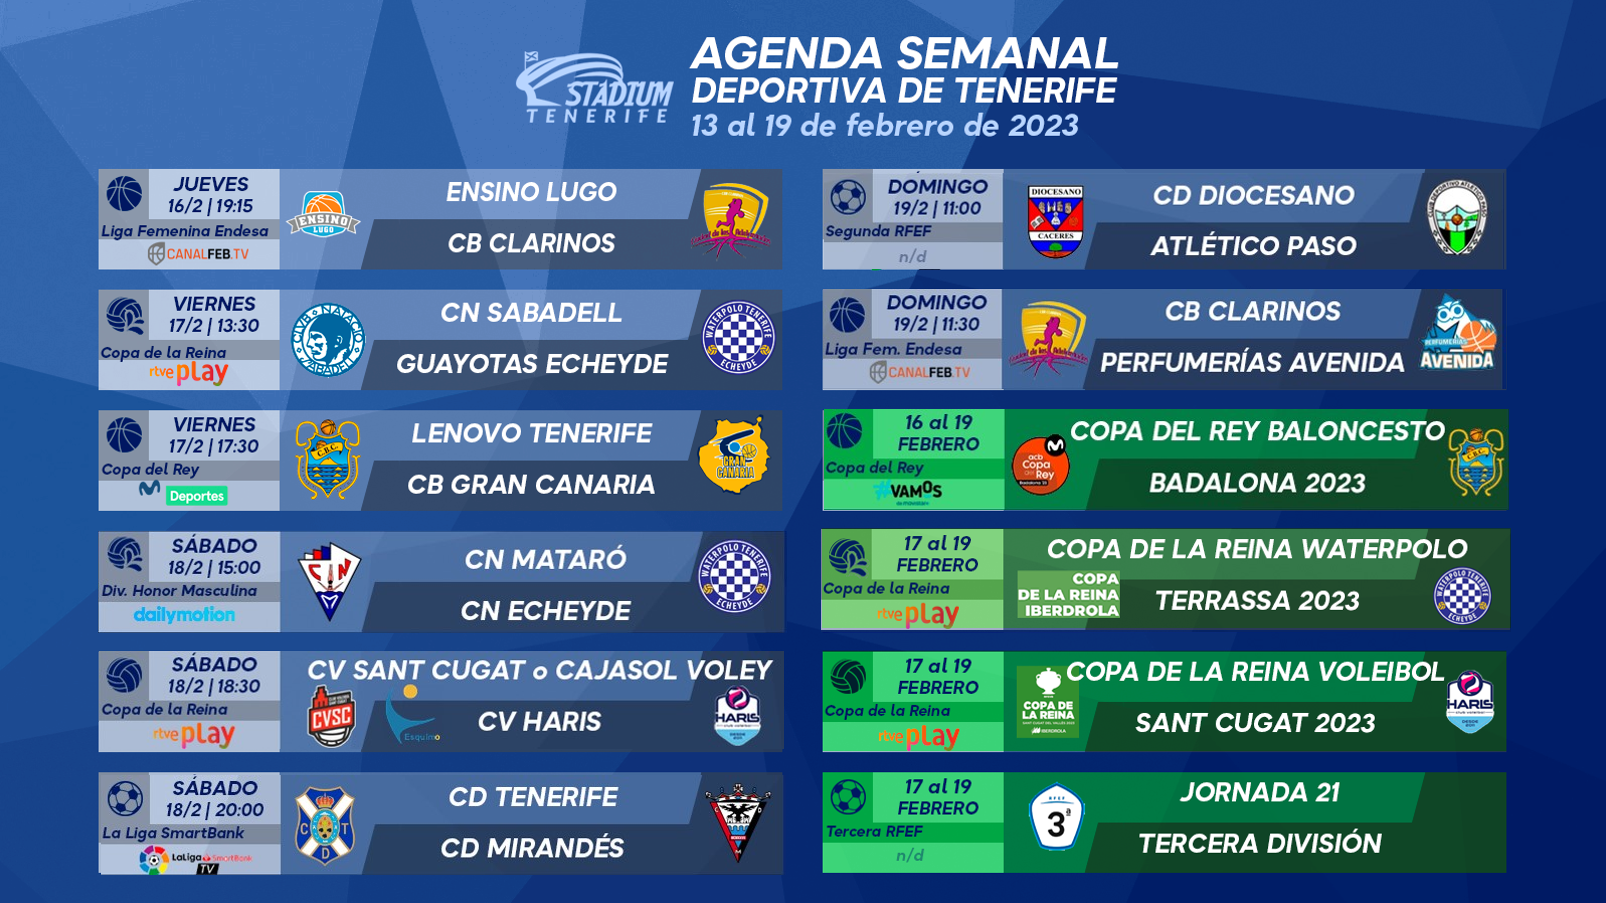 Agenda Semanal Deportiva de Tenerife (13 al 19 de febrero)